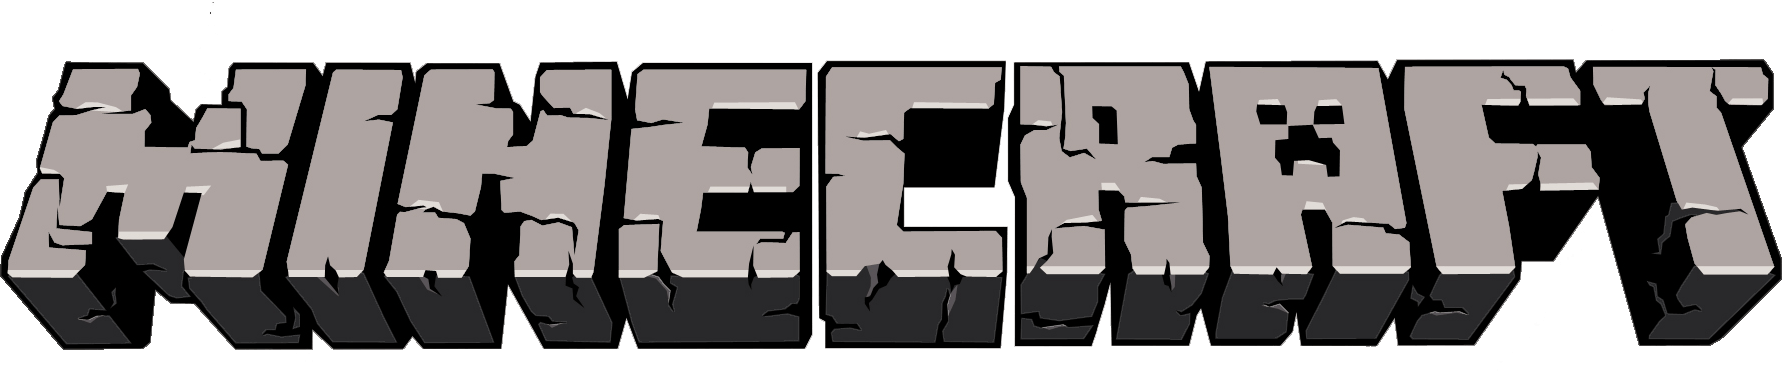 minecraft logo clipart - photo #30